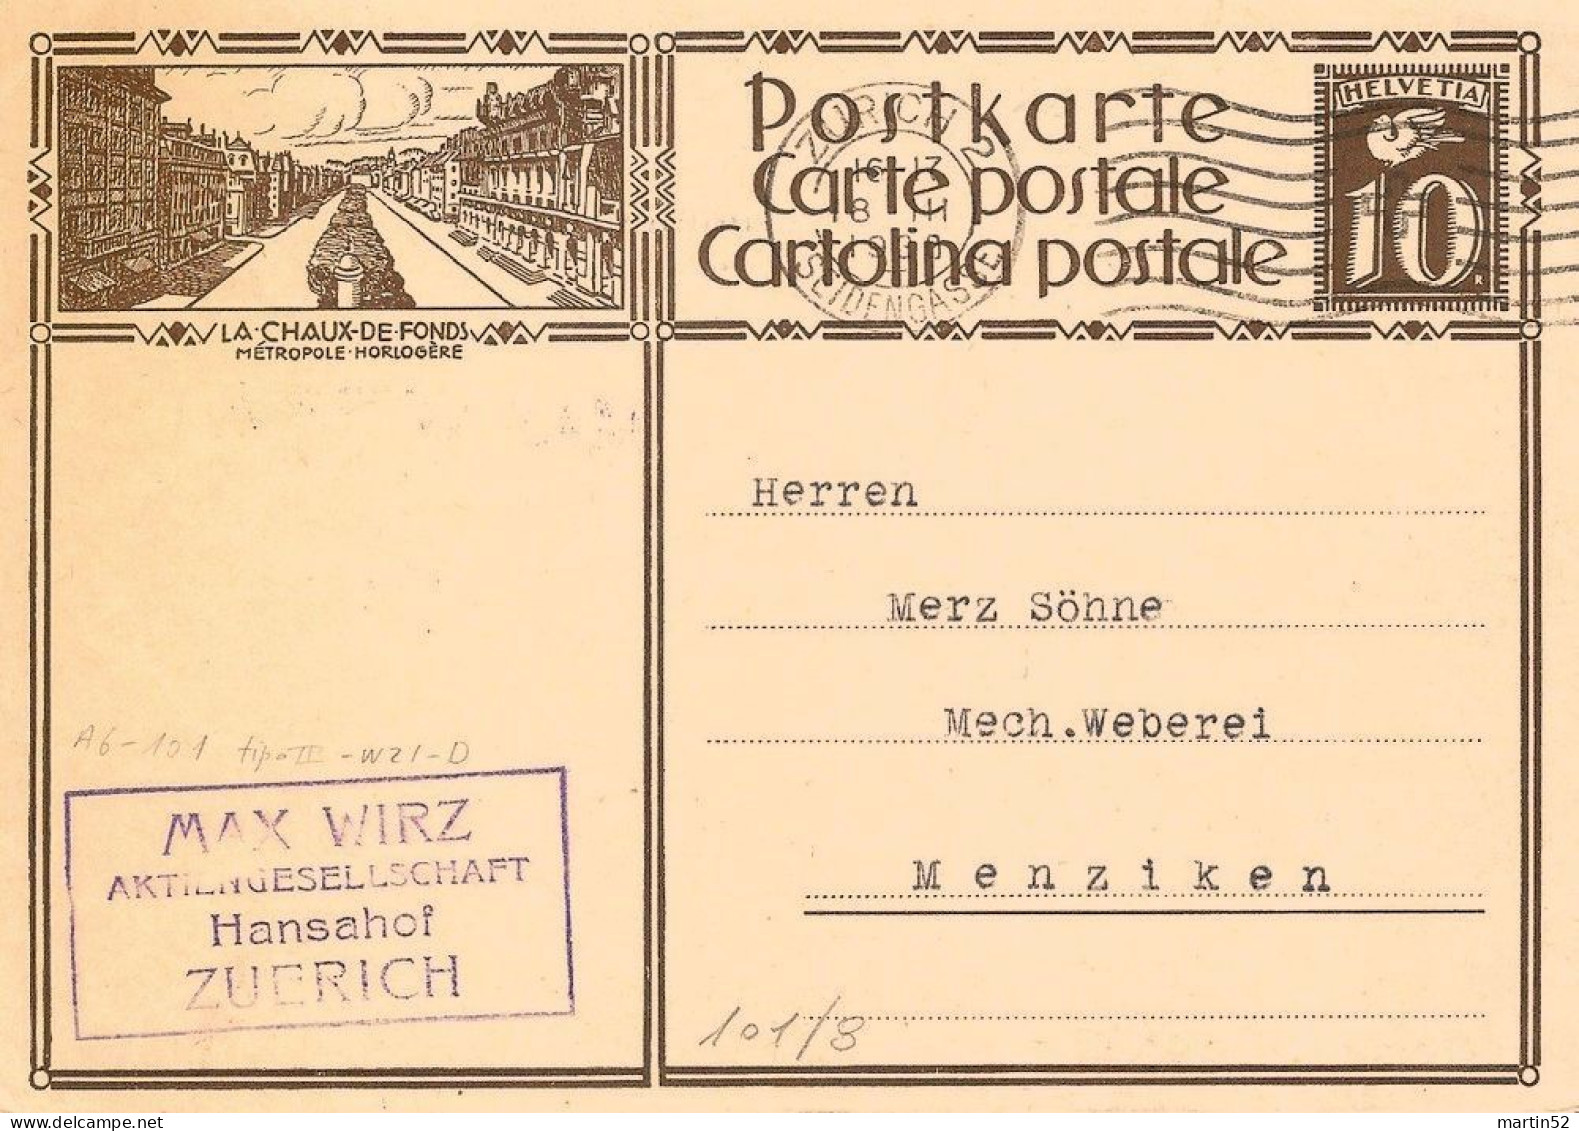 Schweiz Suisse 1930: Bild-PK CPI  LA CHAUX-DE-FONDS MÉTROPOLE HORLOGÈRE Mit Stempel ZÜRICH 18.III.1930 - Relojería